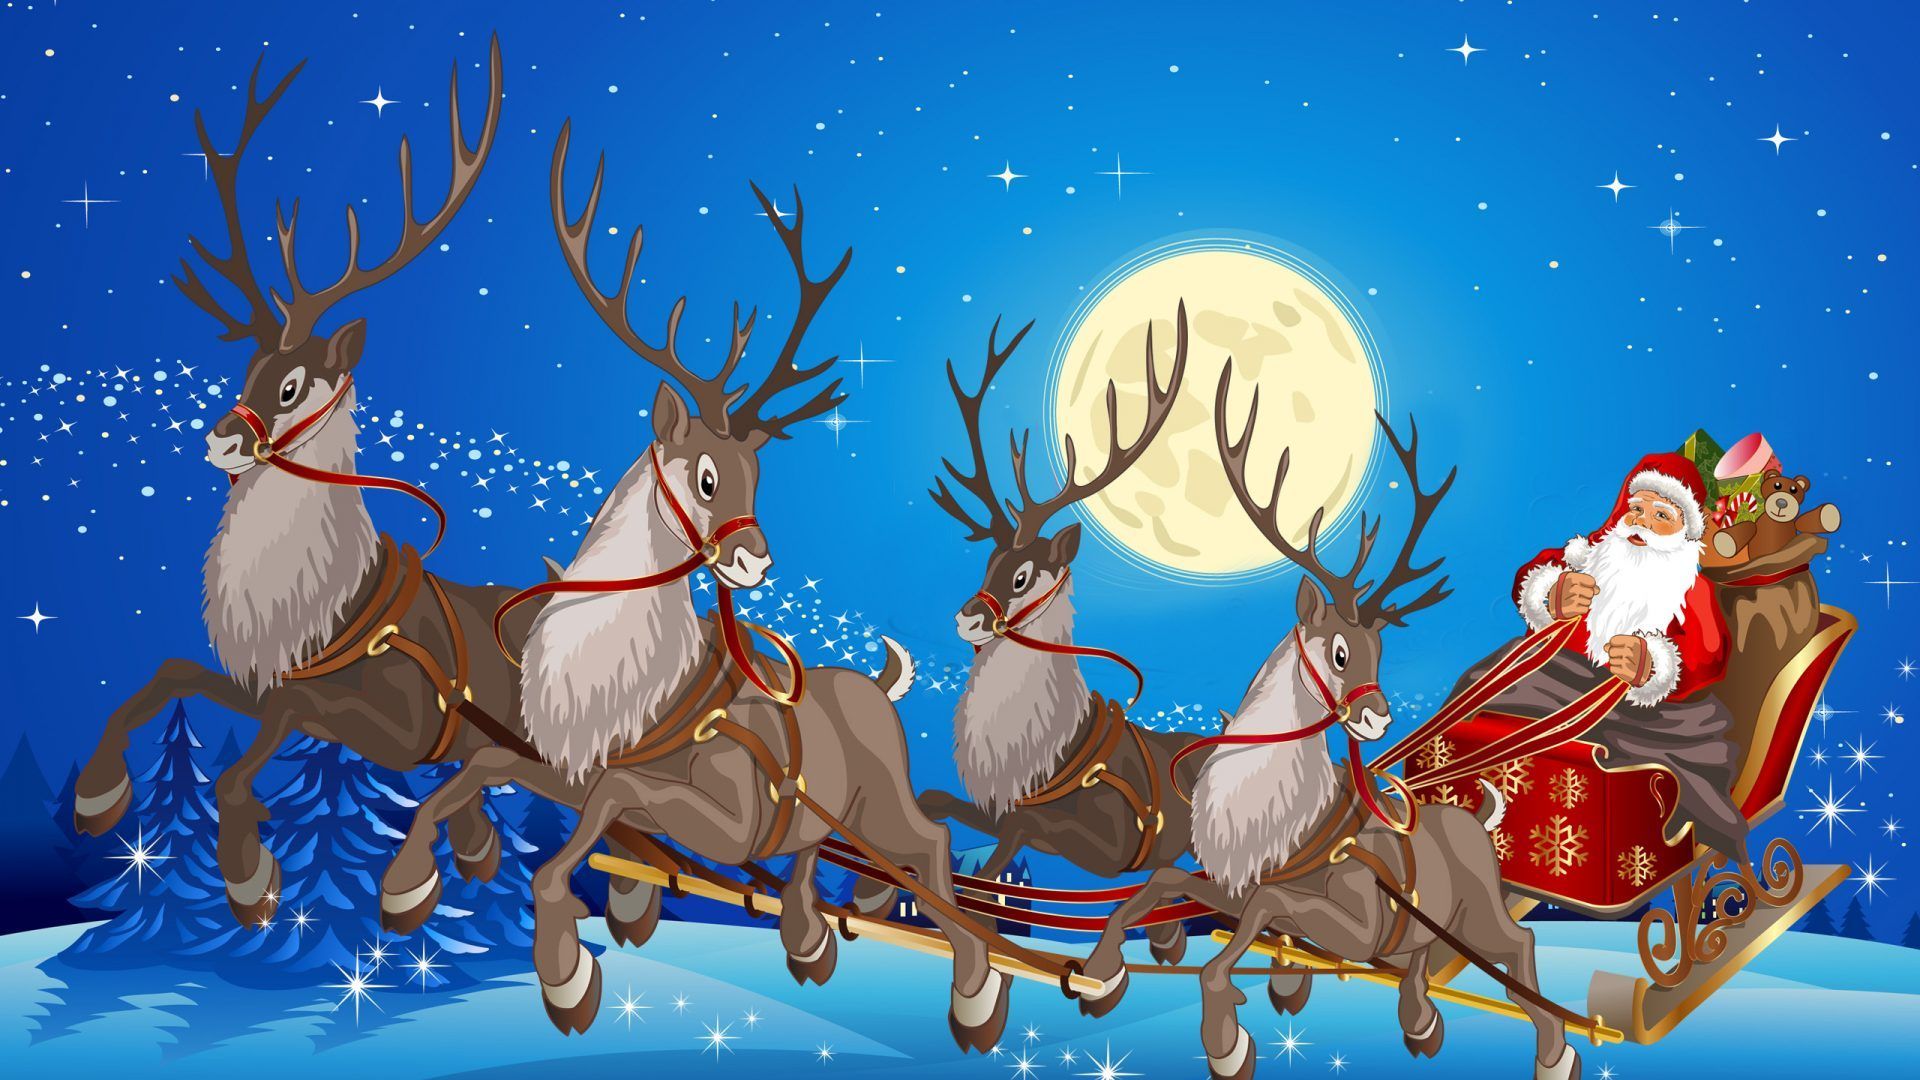 Santa Claus Wallpaper for Christmas. Chanson de noel, Musique de noël, Image pere noel